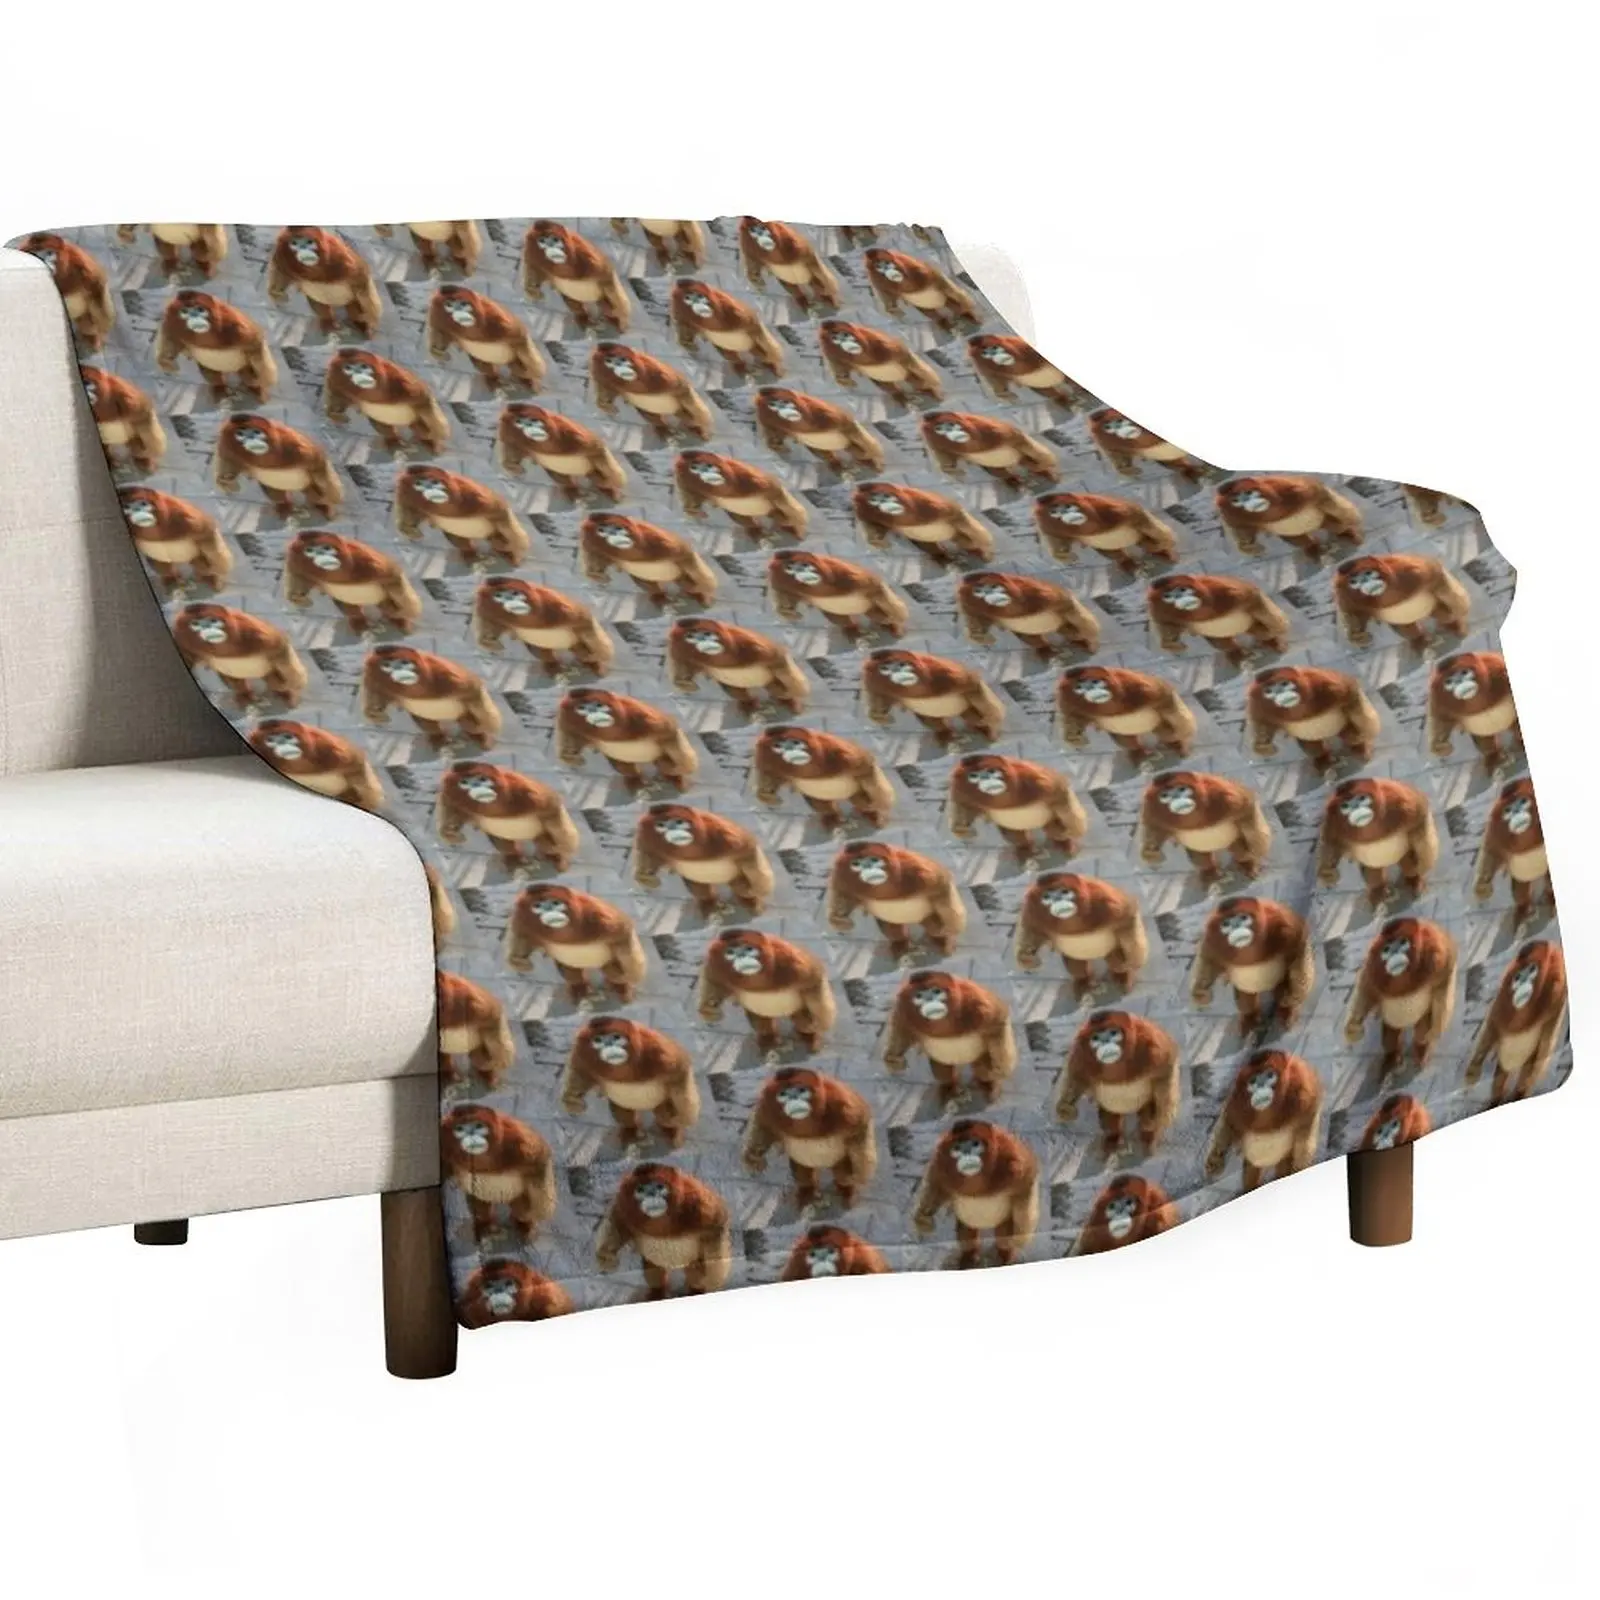 

snub nosed monkey (orange) - monke t meme (sad) Throw Blanket Luxury Decorative Beds sofa bed Soft Beds Blankets